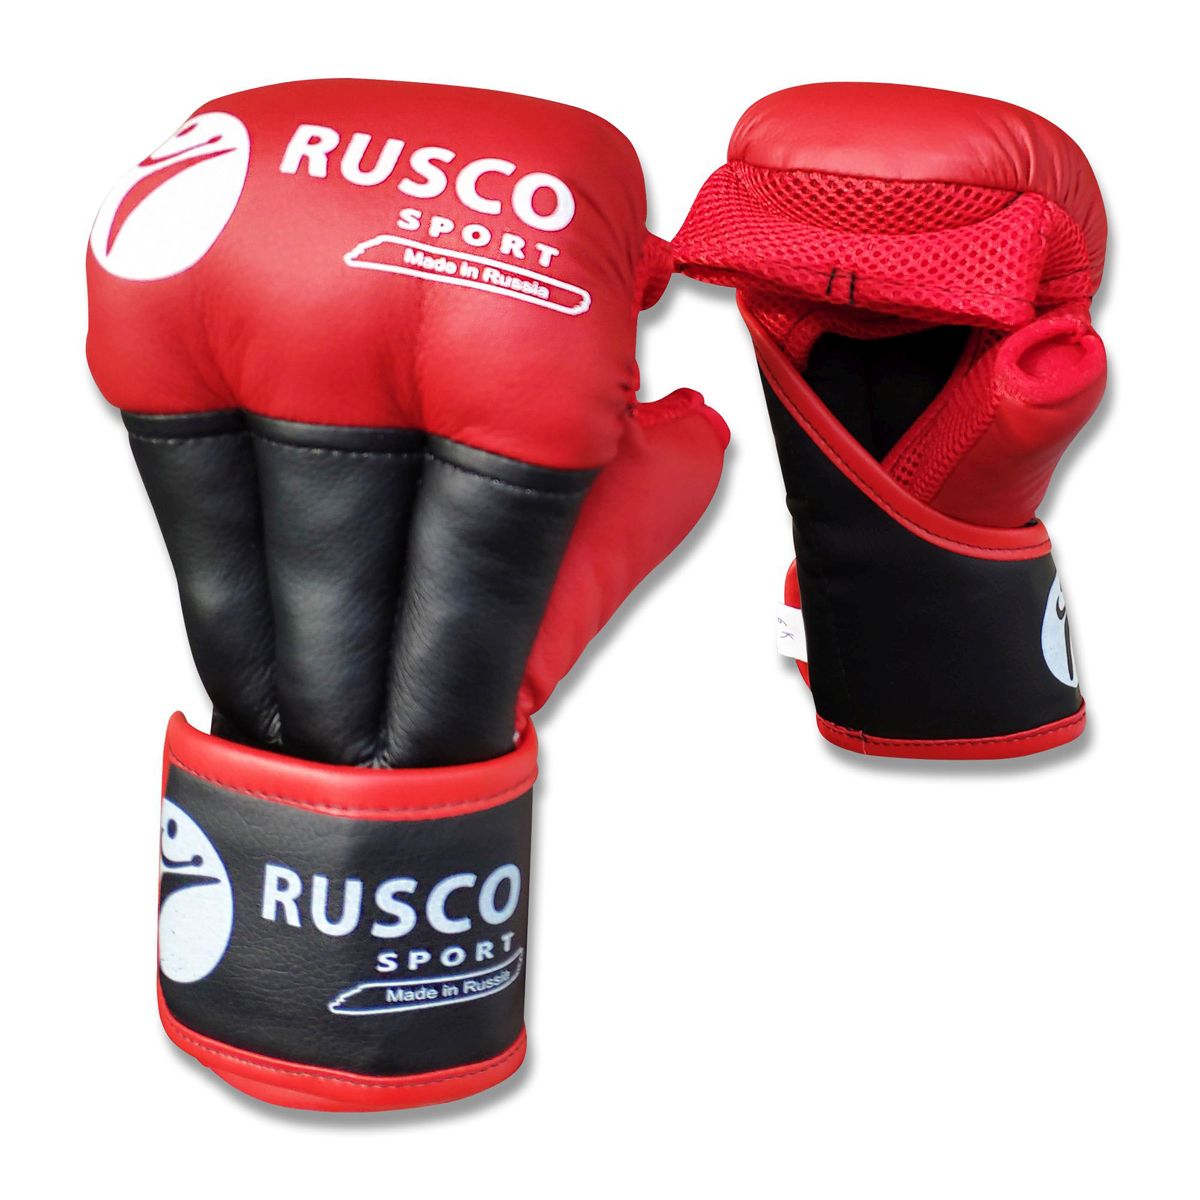 Перчатки рукопашные купить. Перчатки для рукопашного боя Rusco Sport. Rusco Sport перчатки 10 унций. Перчатки для рукопашного боя Rusco 10oz.